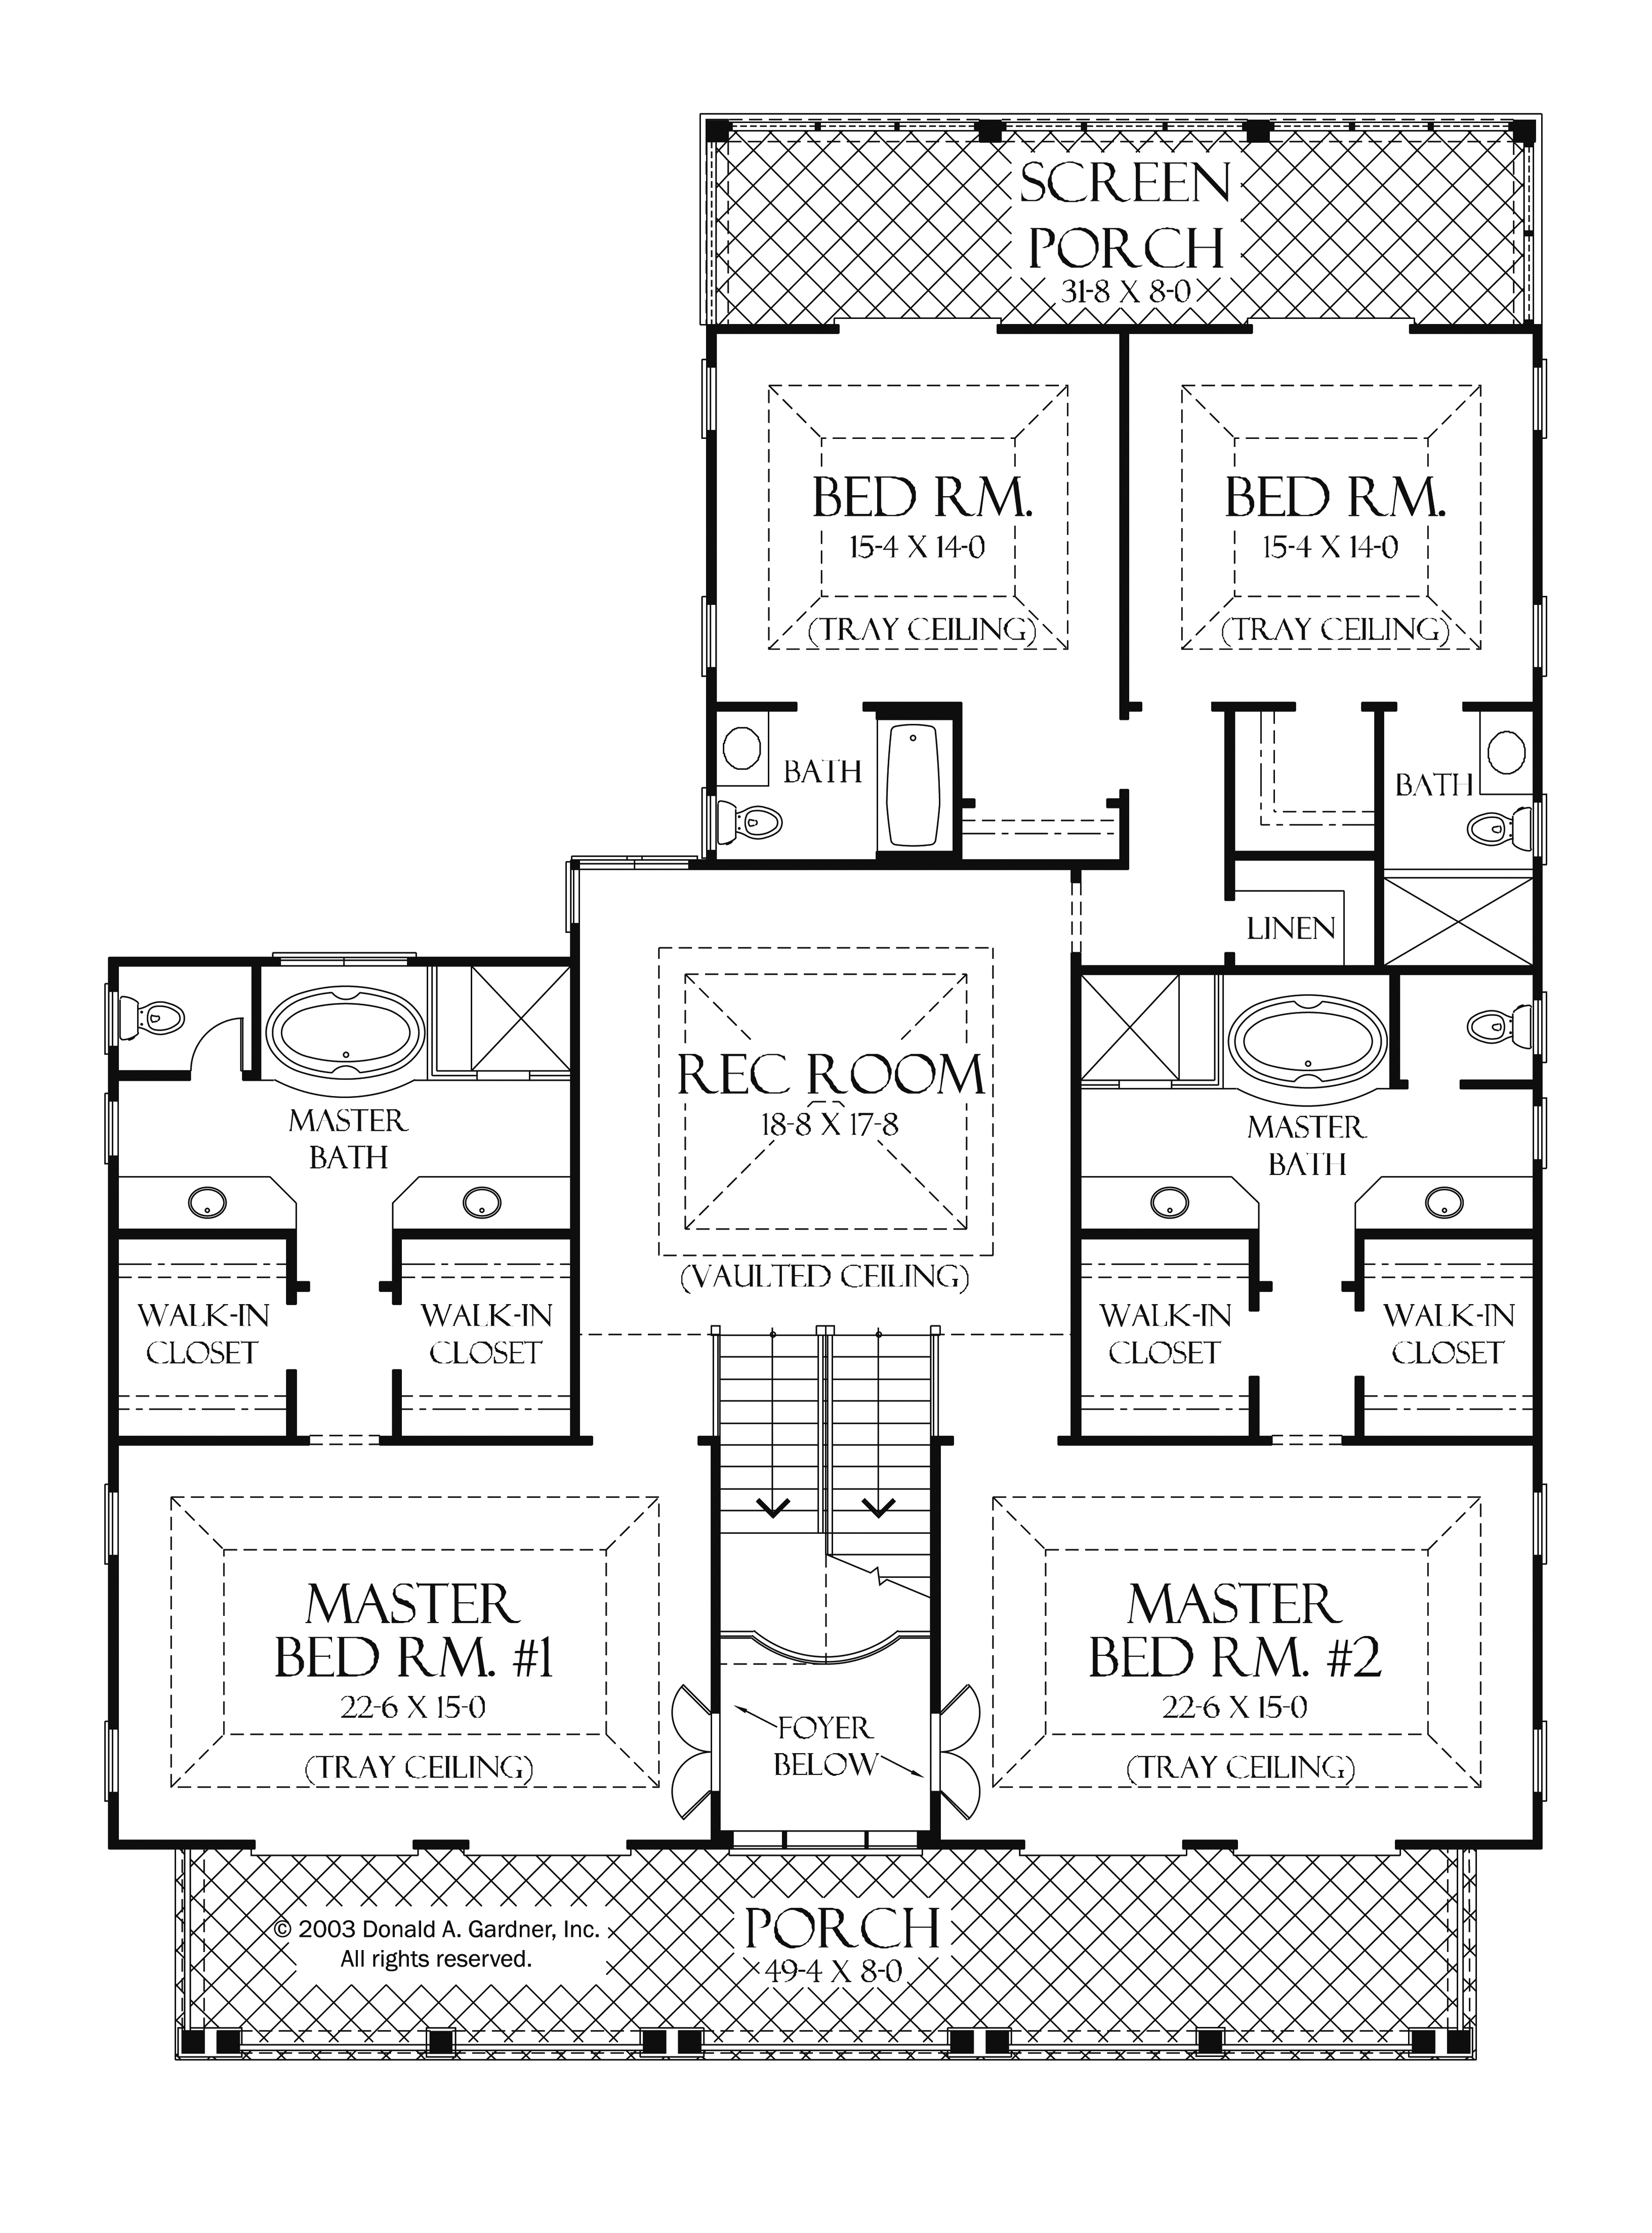 2 master bedroom homes for rent near me 2 master bedroom floor plans best of 27